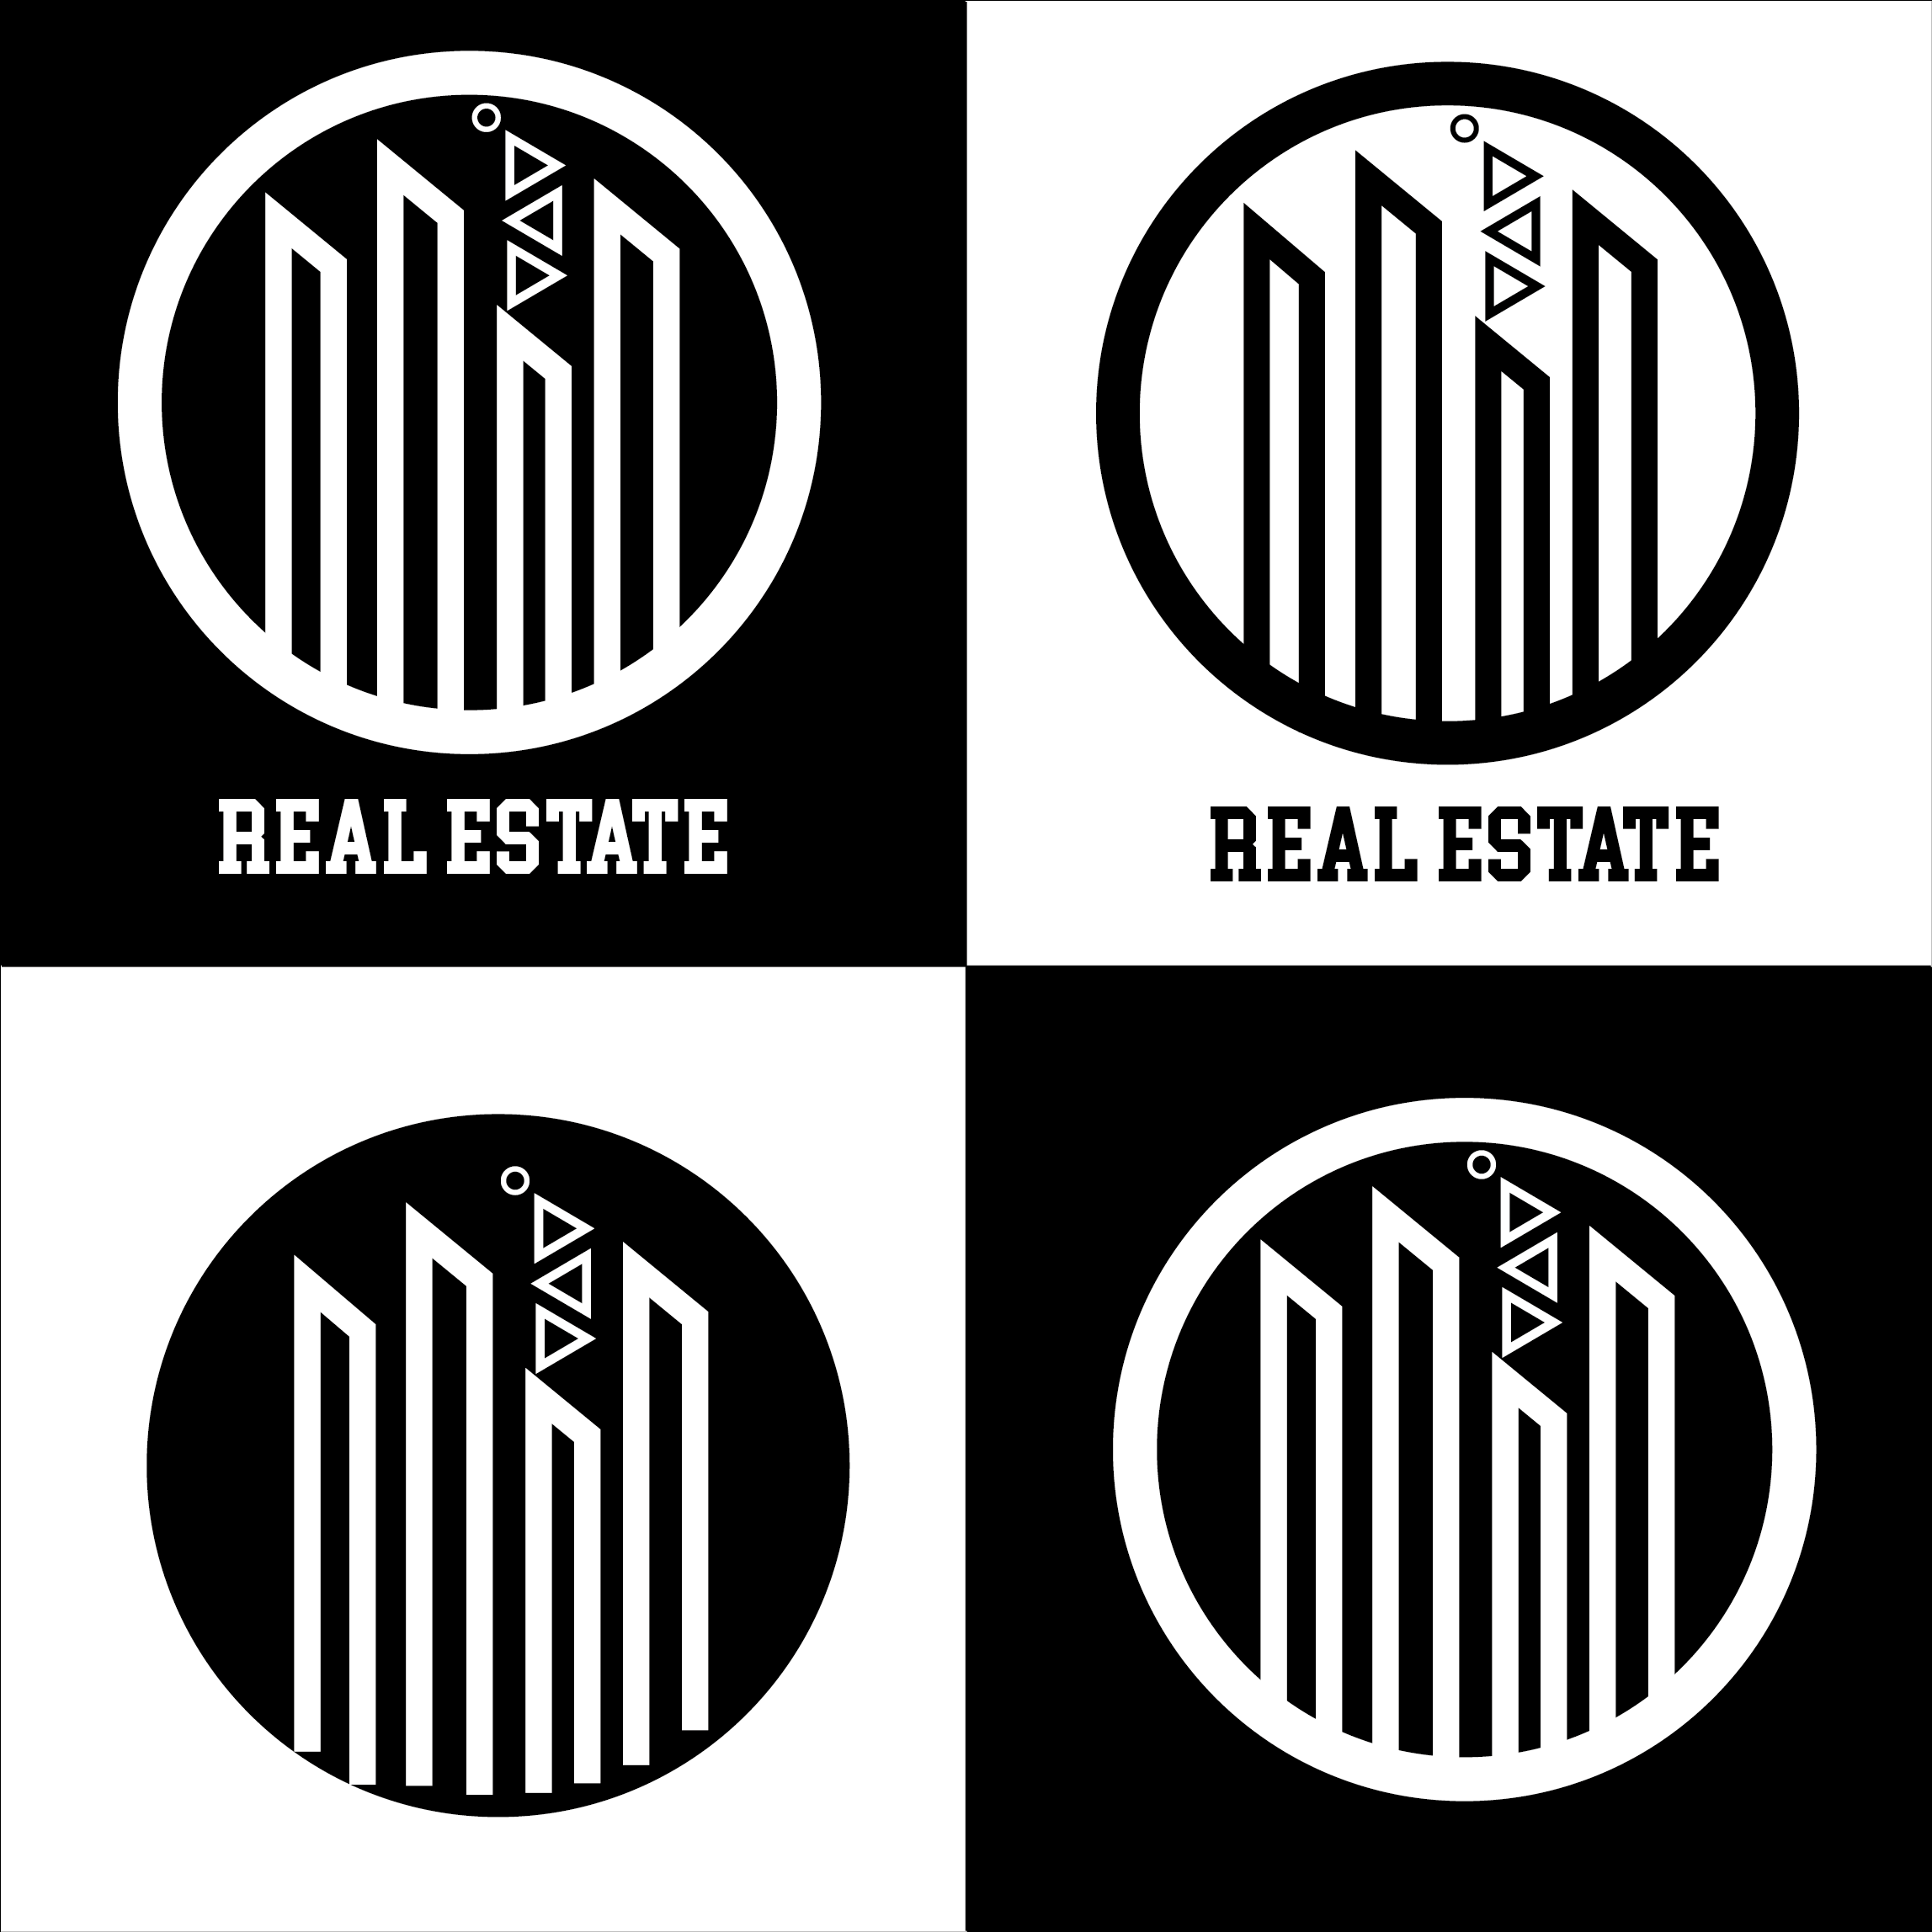 Real Estate logo design | Logo design cover image.